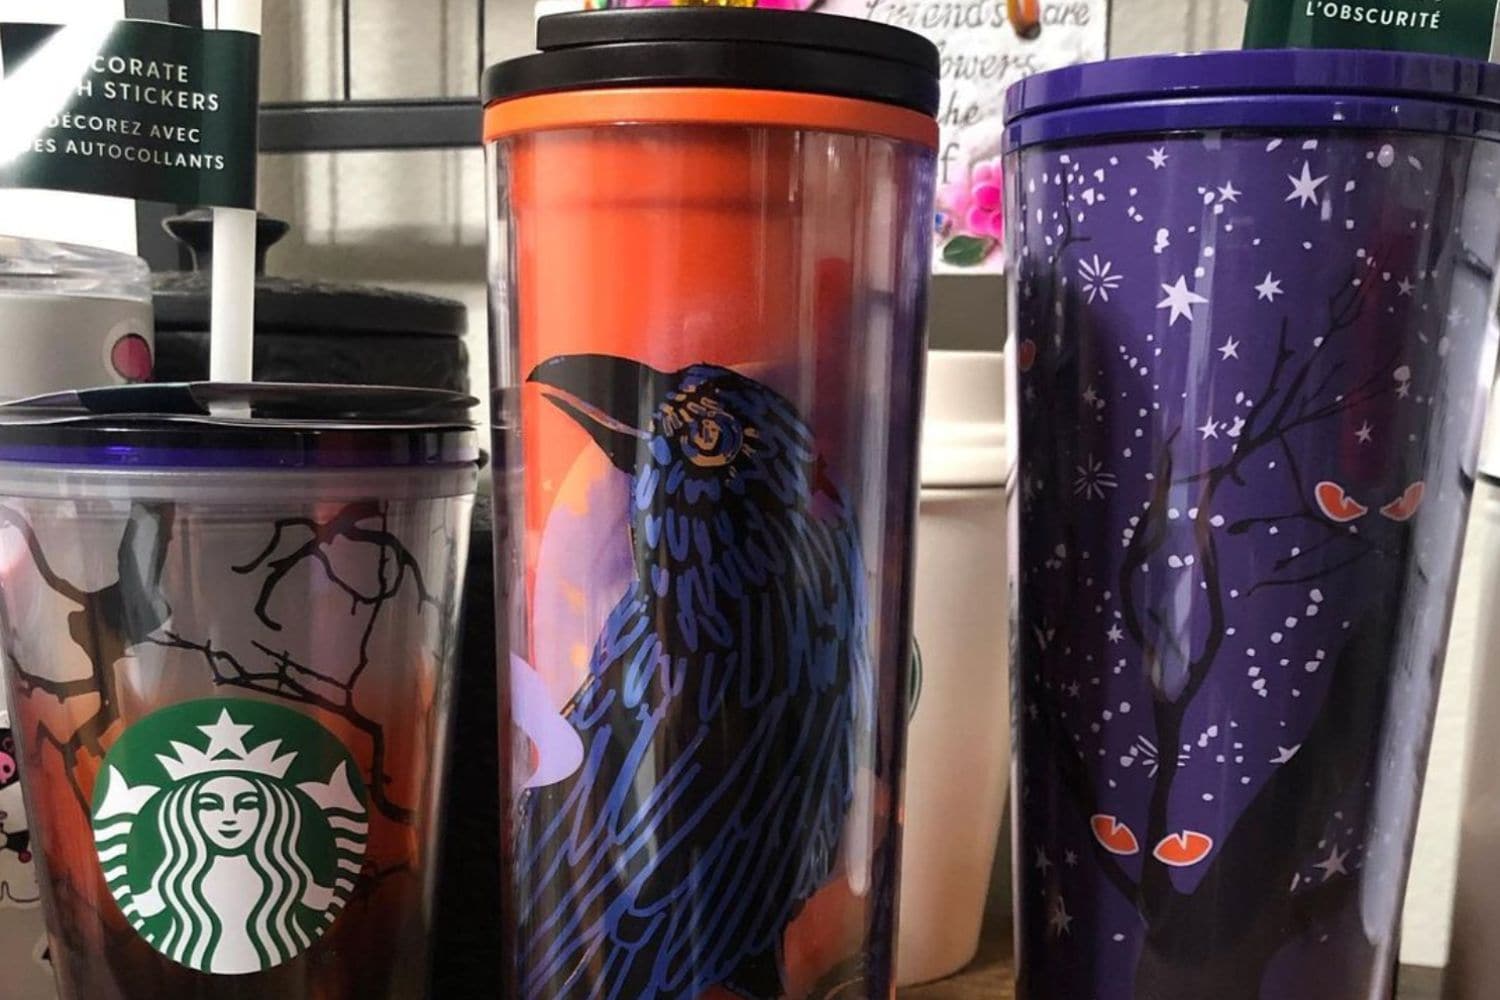 Starbucks introduces new glow in the dark Halloween merchandise - Starbucks  Stories